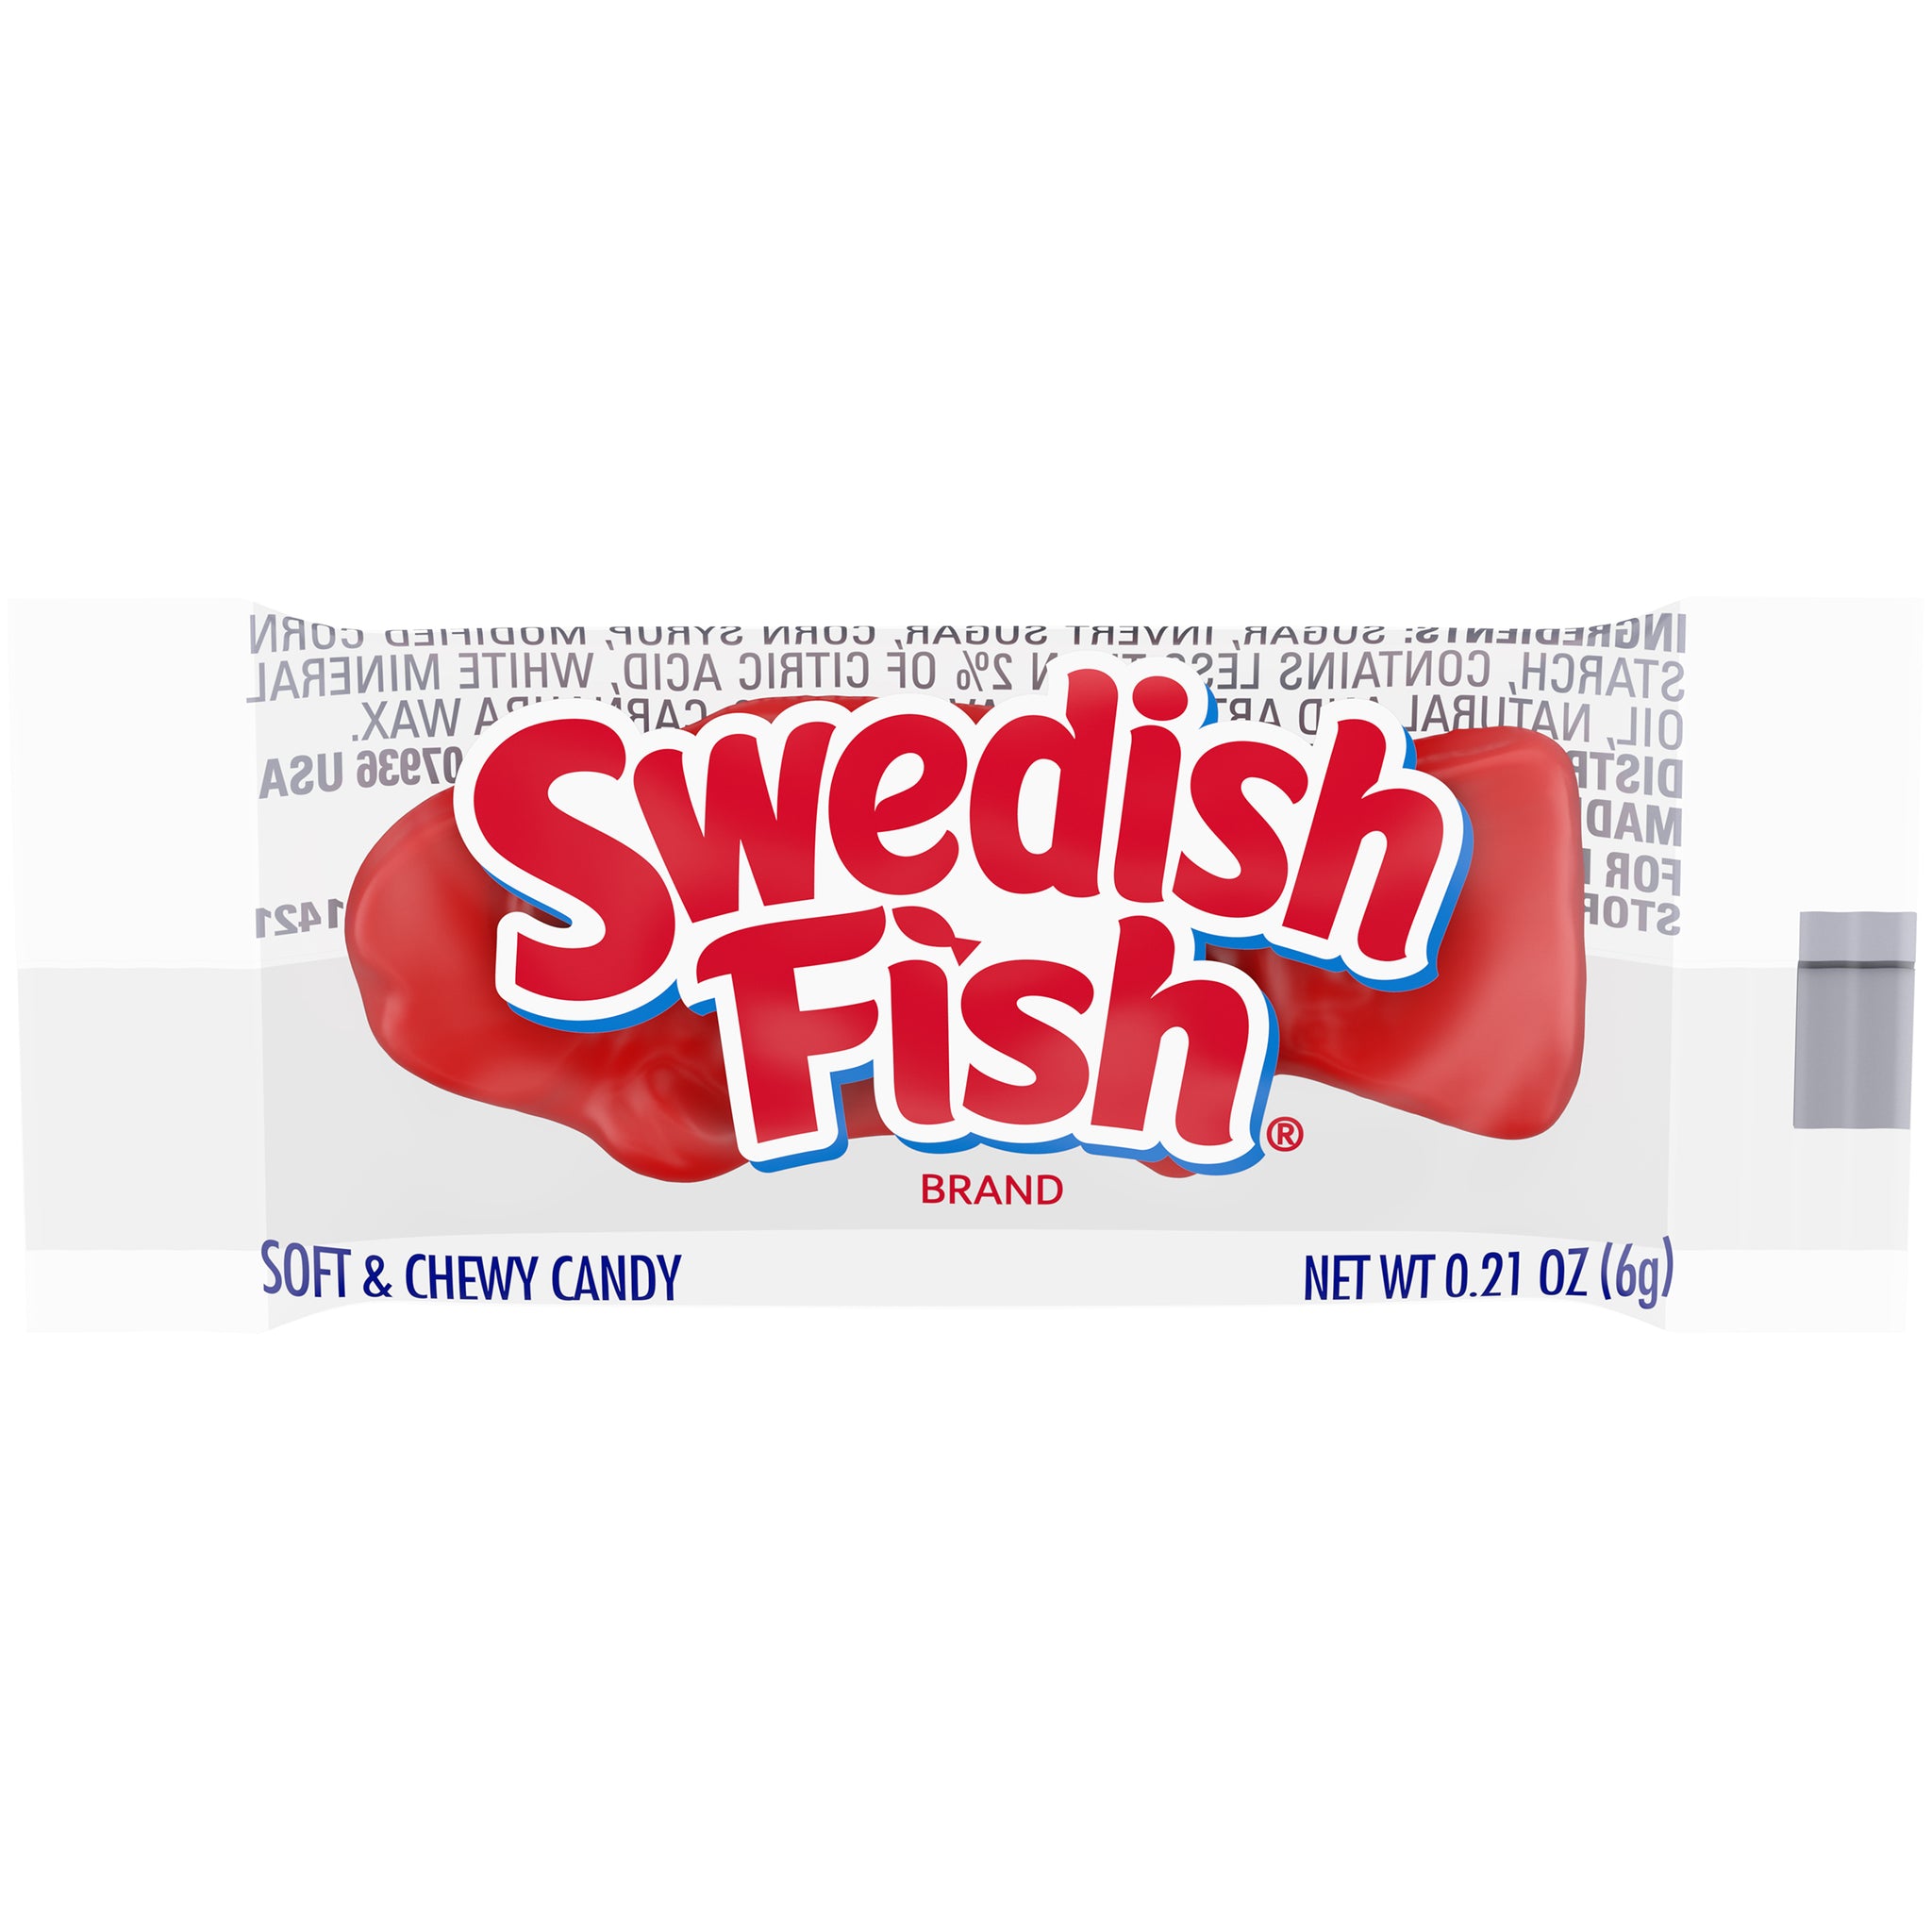  Swedish Fish Soft & Chewy Candy (Original, 3.5-Pound